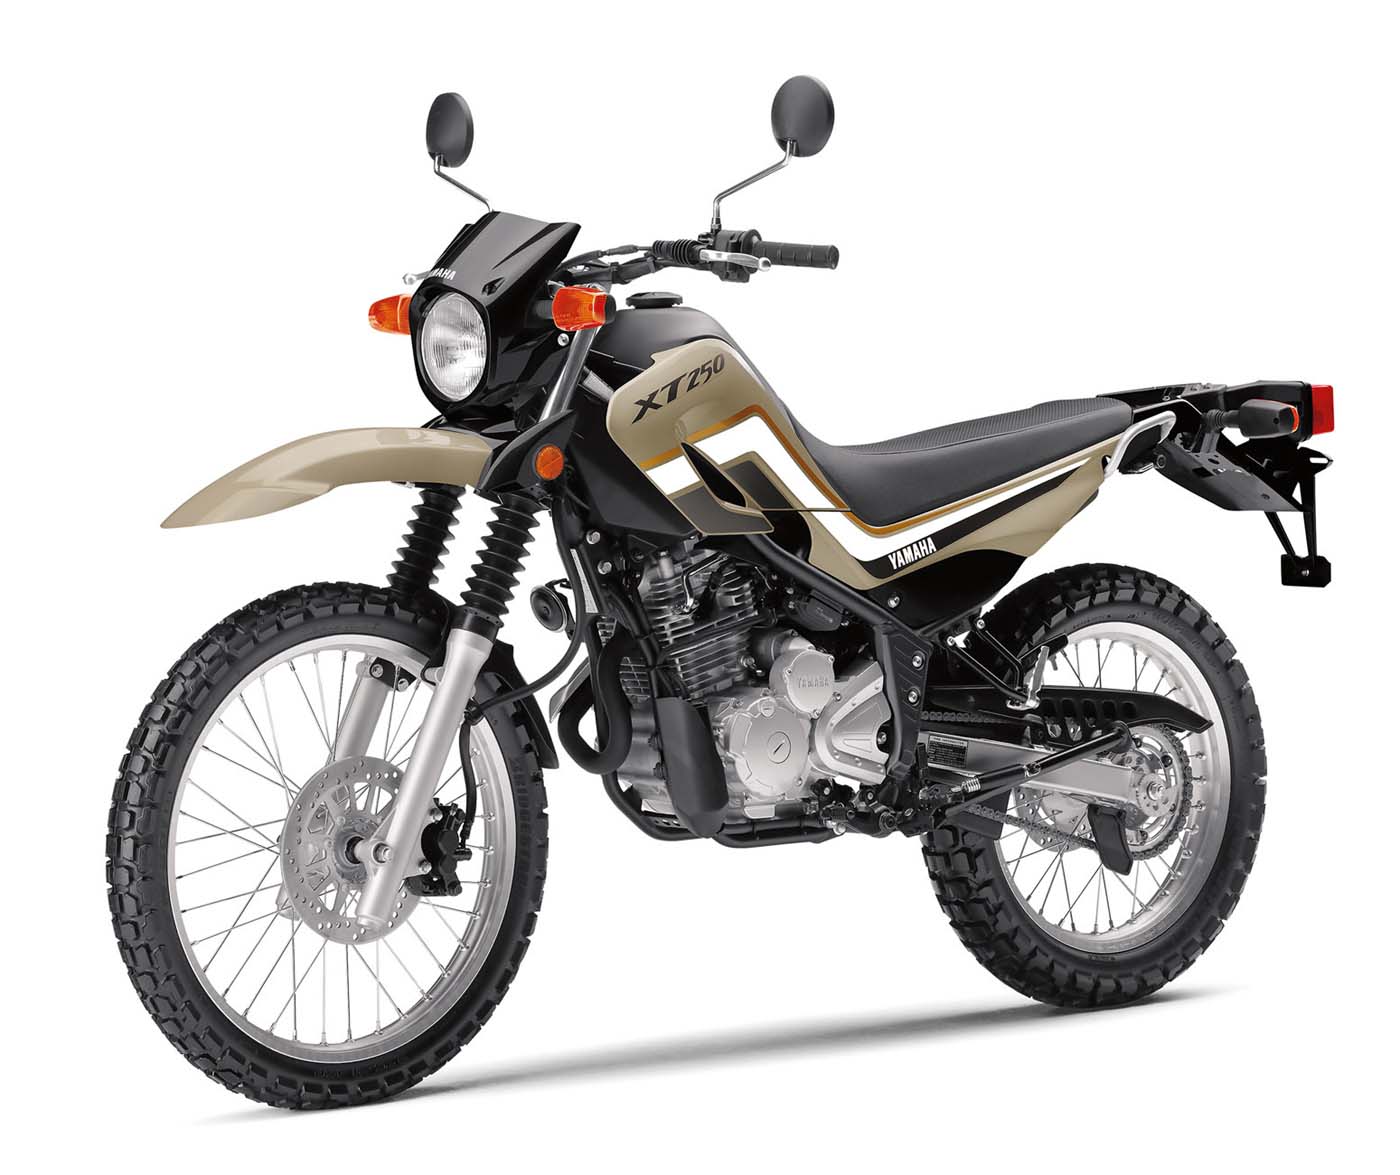 Yamaha XT 250 (2018-19) technical specifications